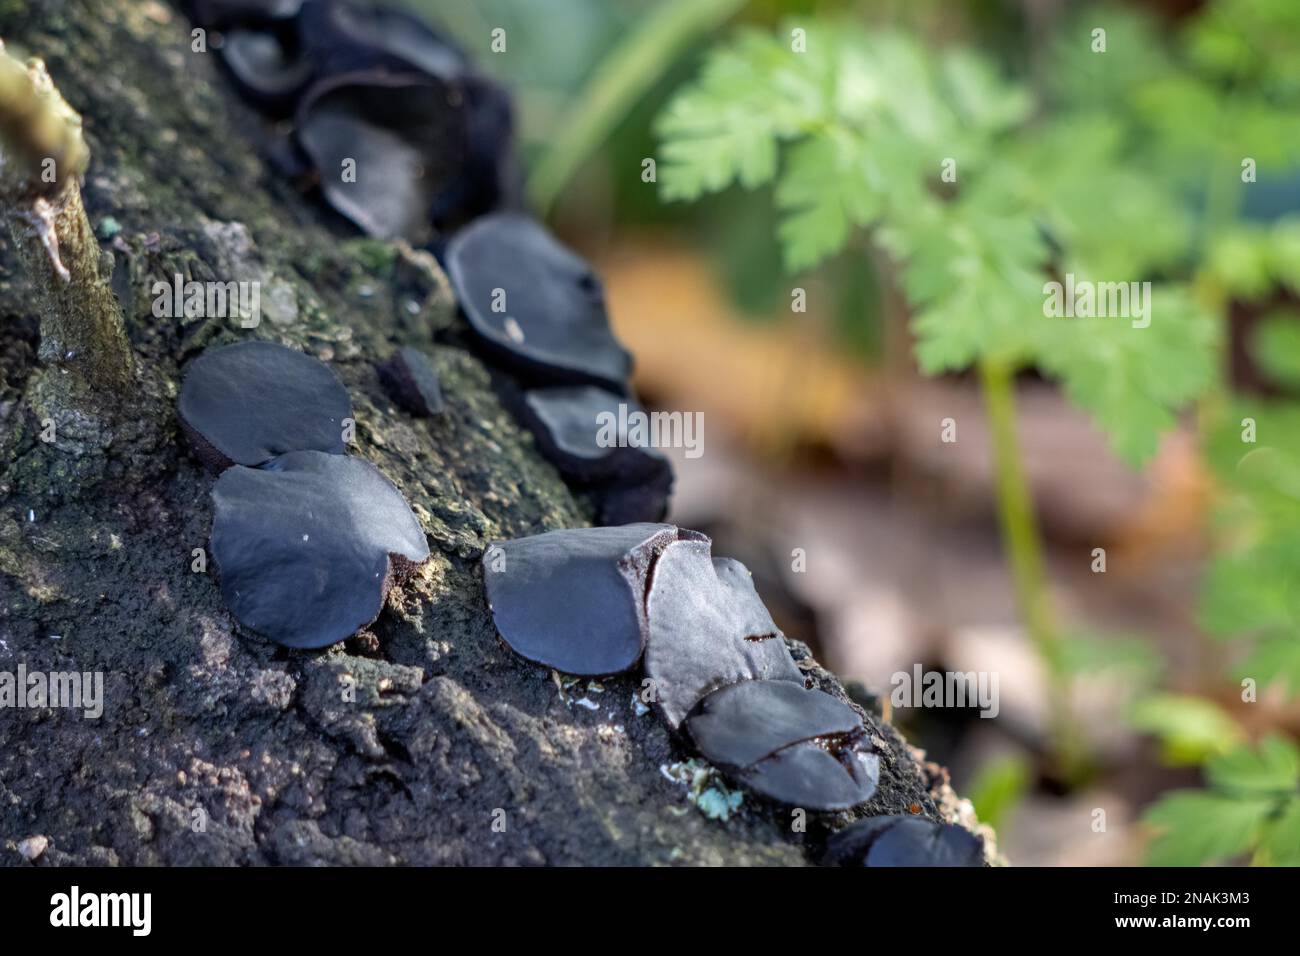 Black bulgar (Bulgaria inquinans) or Black Jelly Drops growing on a fallen tree Stock Photo